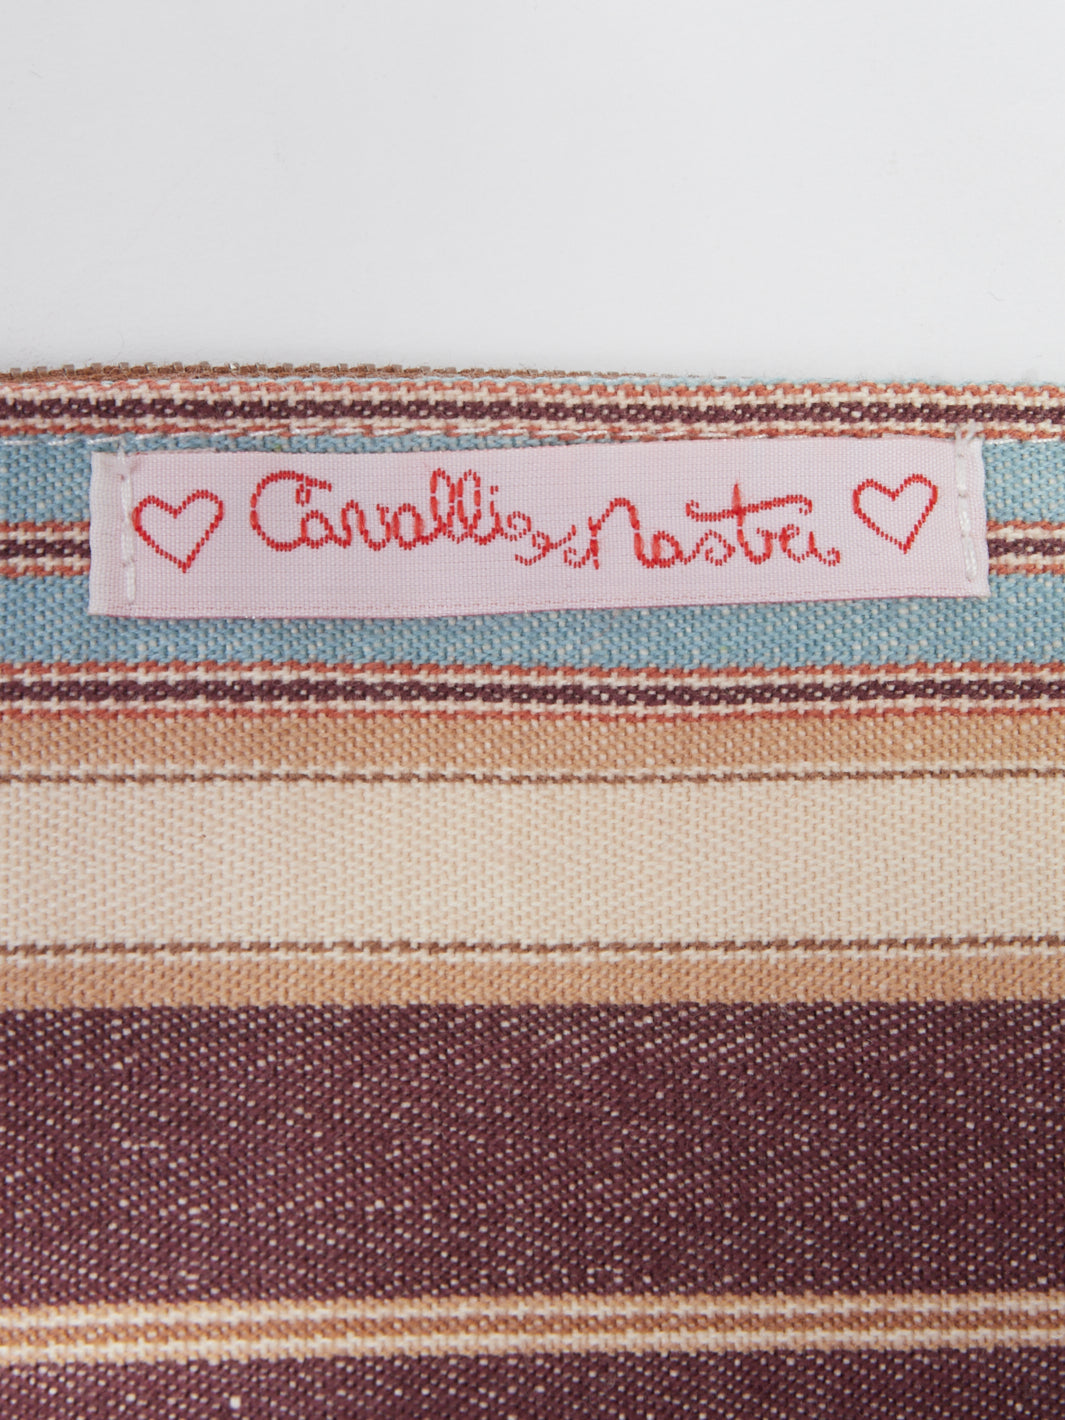 Y2K Cavalli e Nastri  clutch bag in brown, beige and baby blue stripes